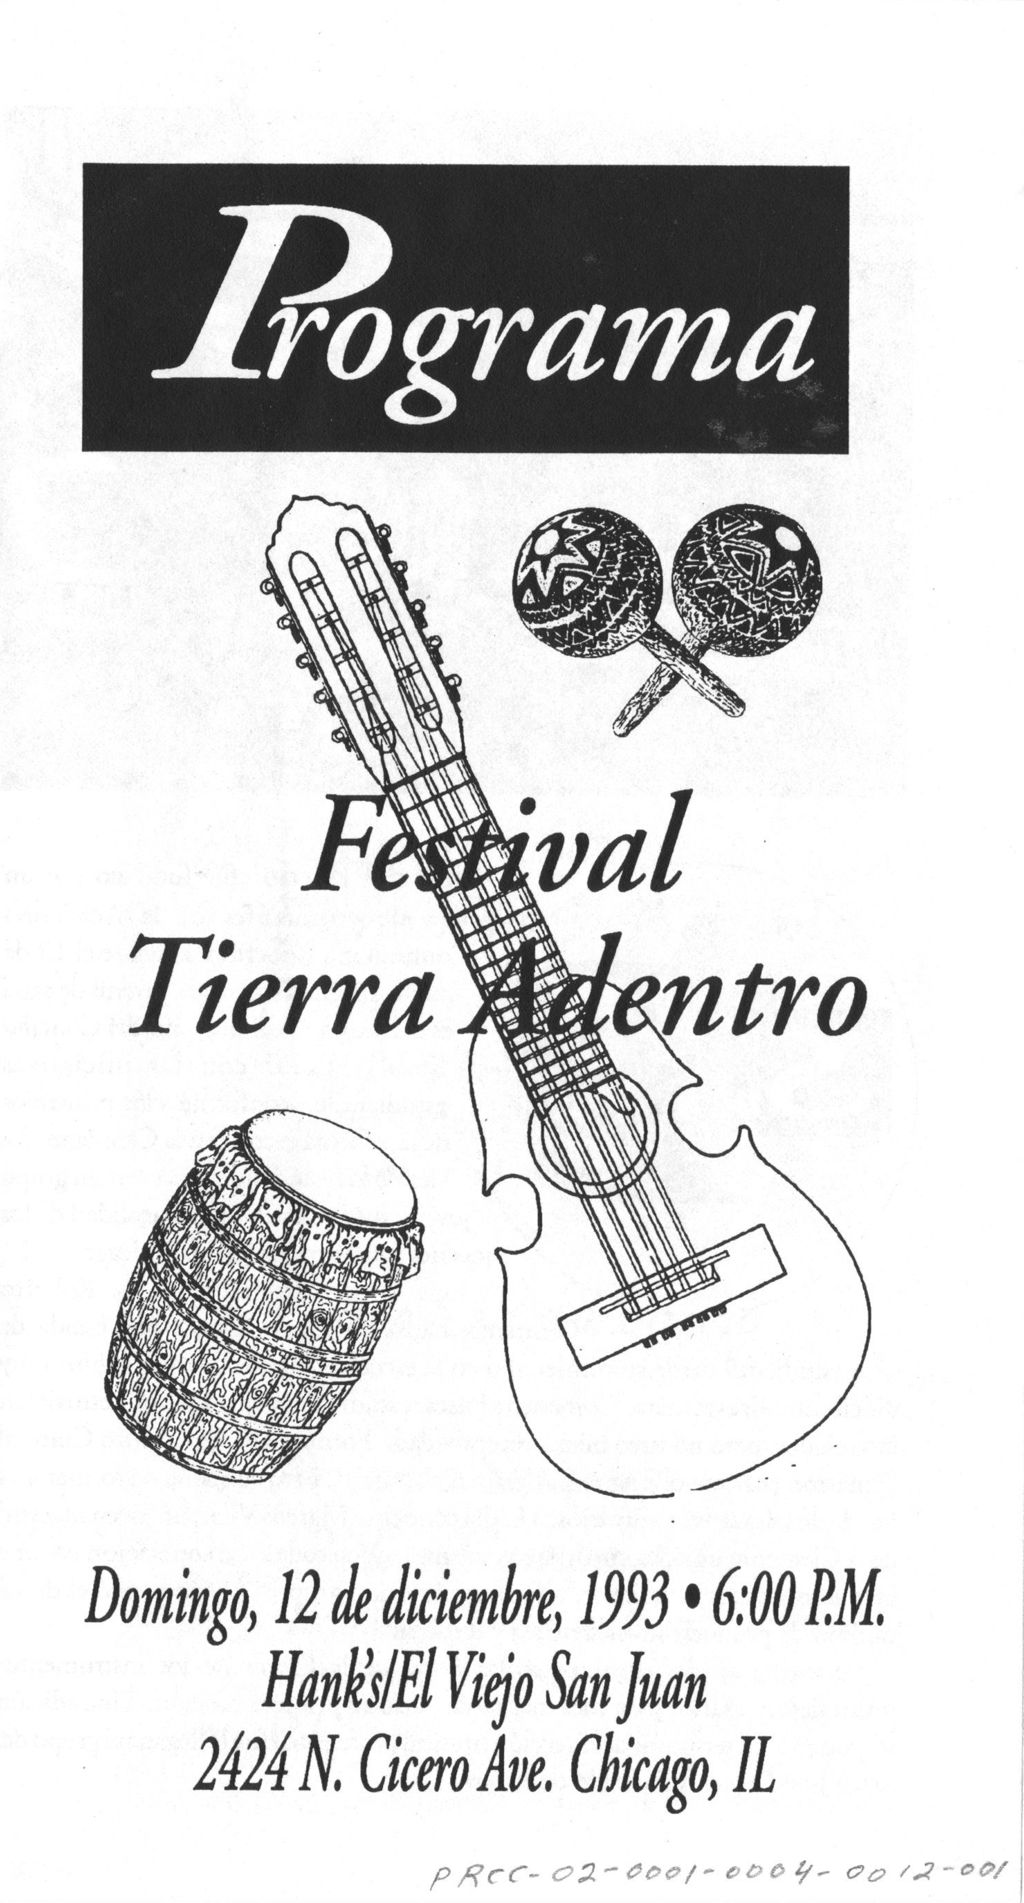 Festival Tierra Adentro